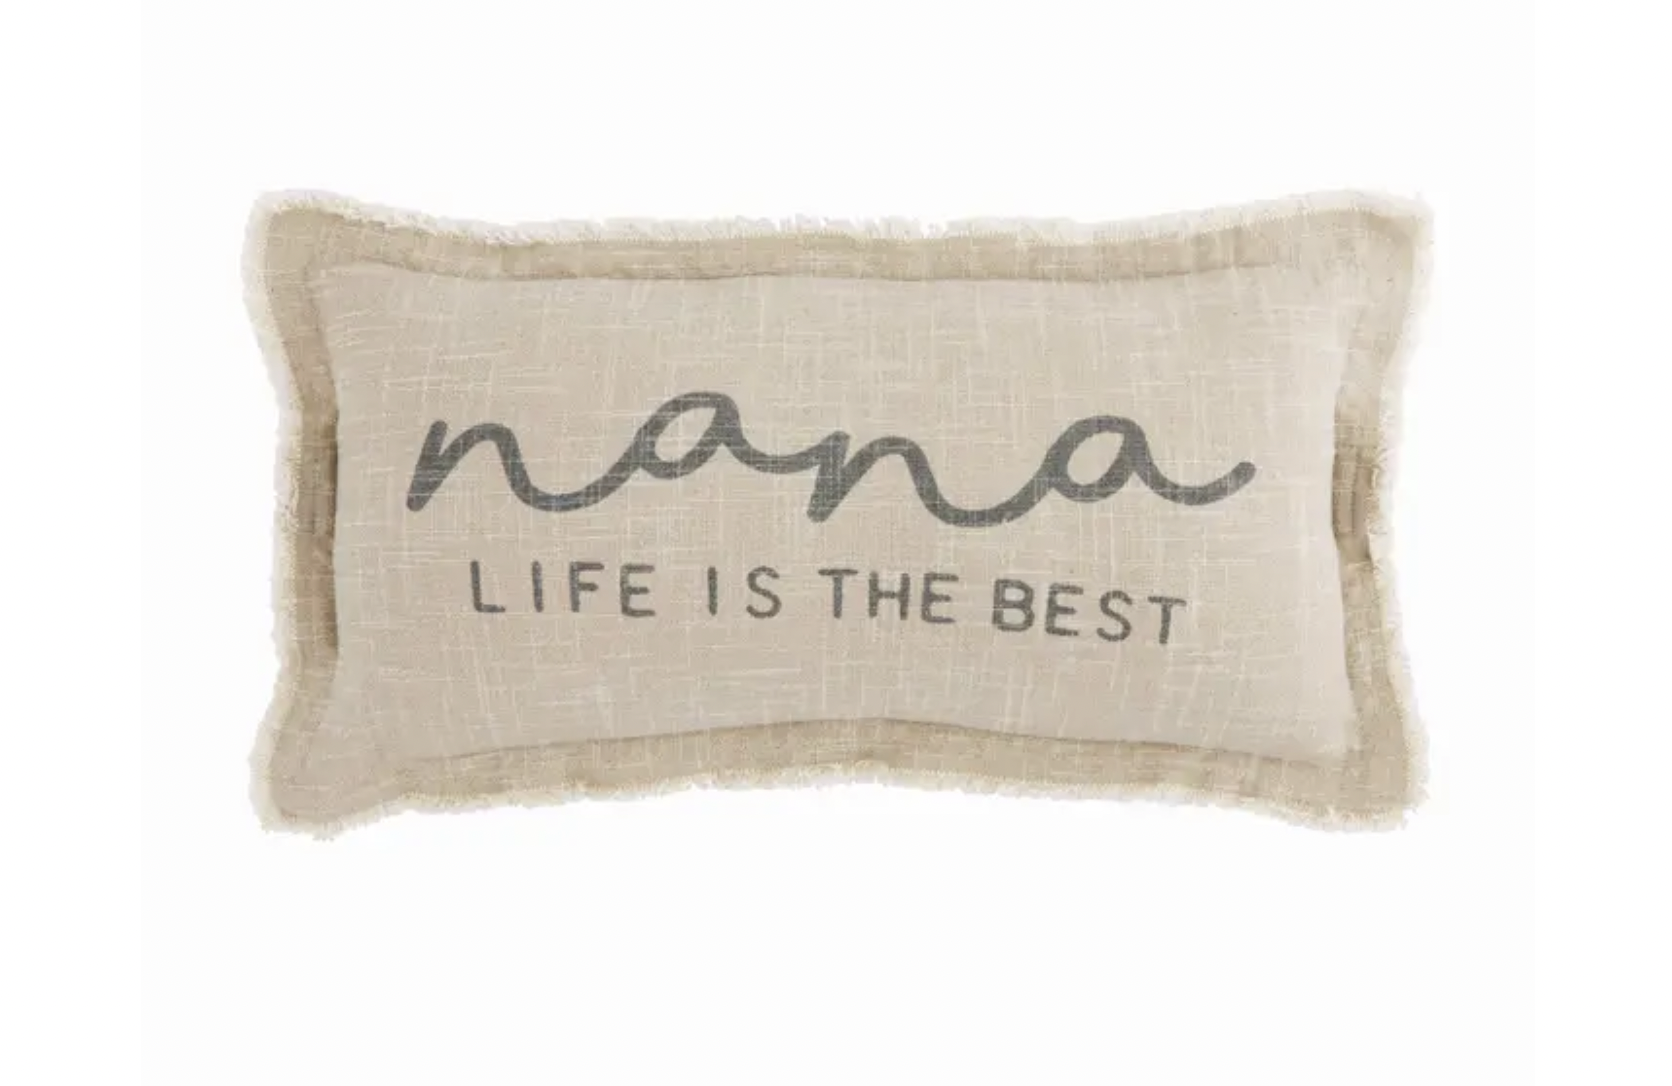 Nana Life Small Pillow